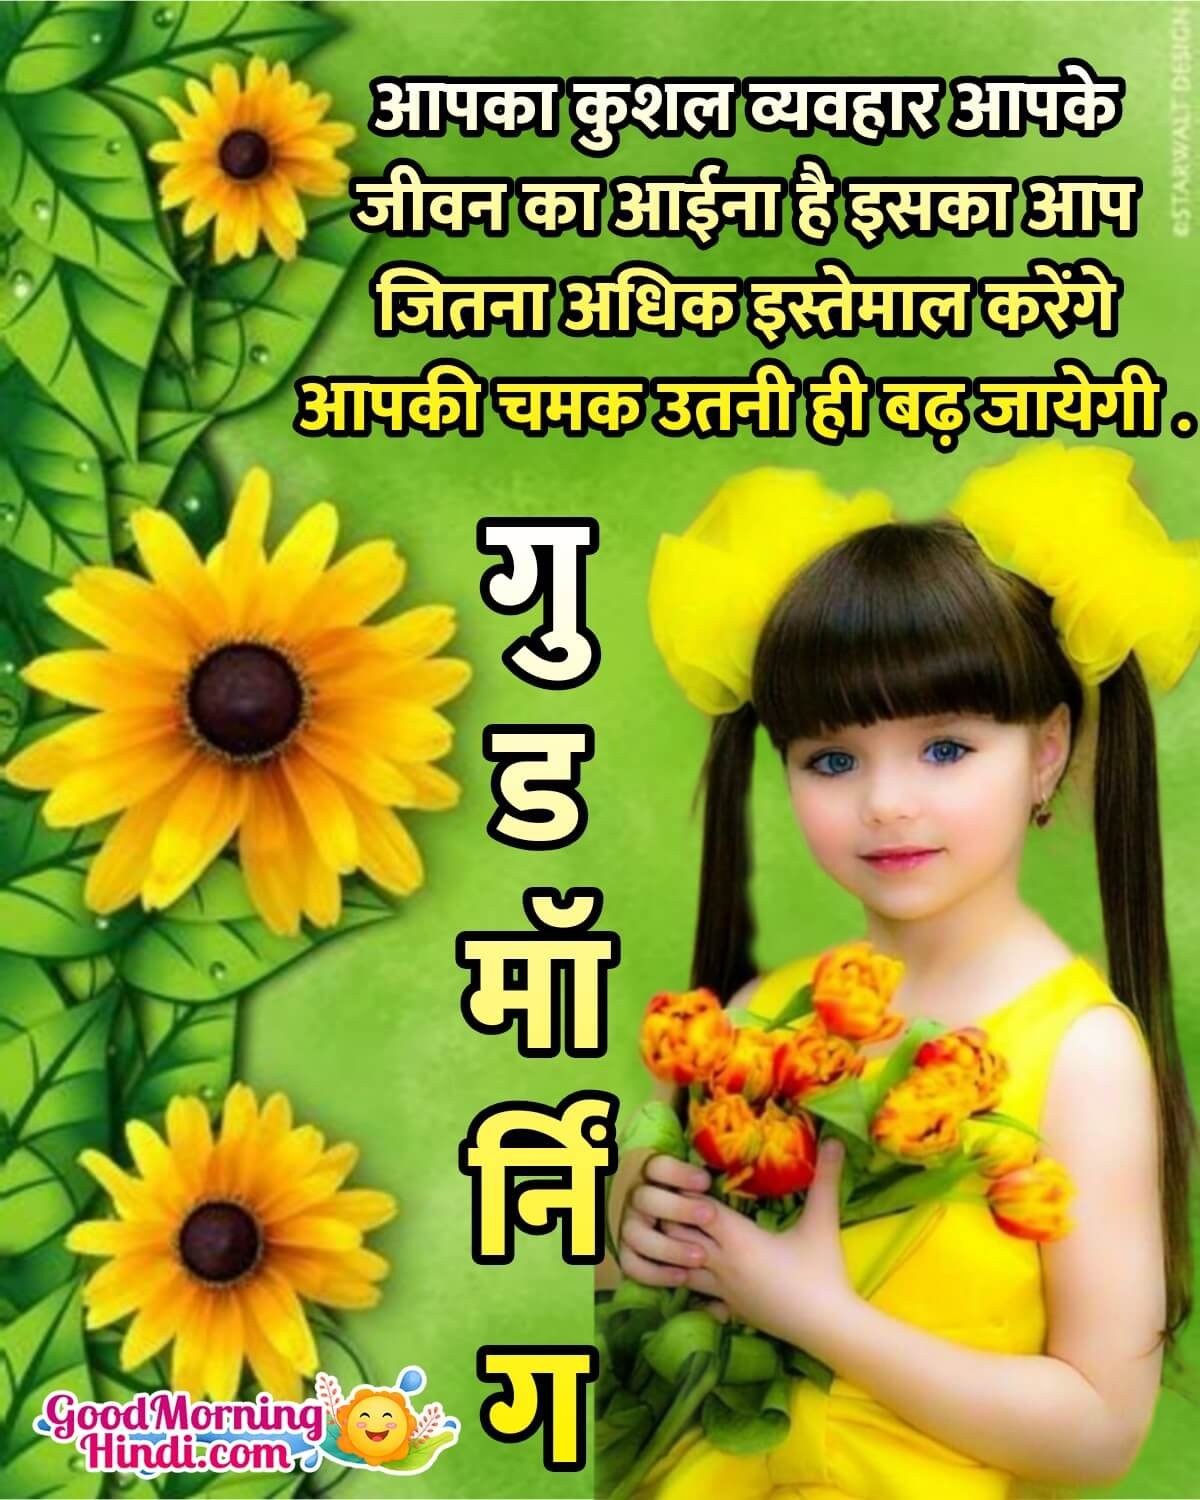 Good Morning Message Image In Hindi